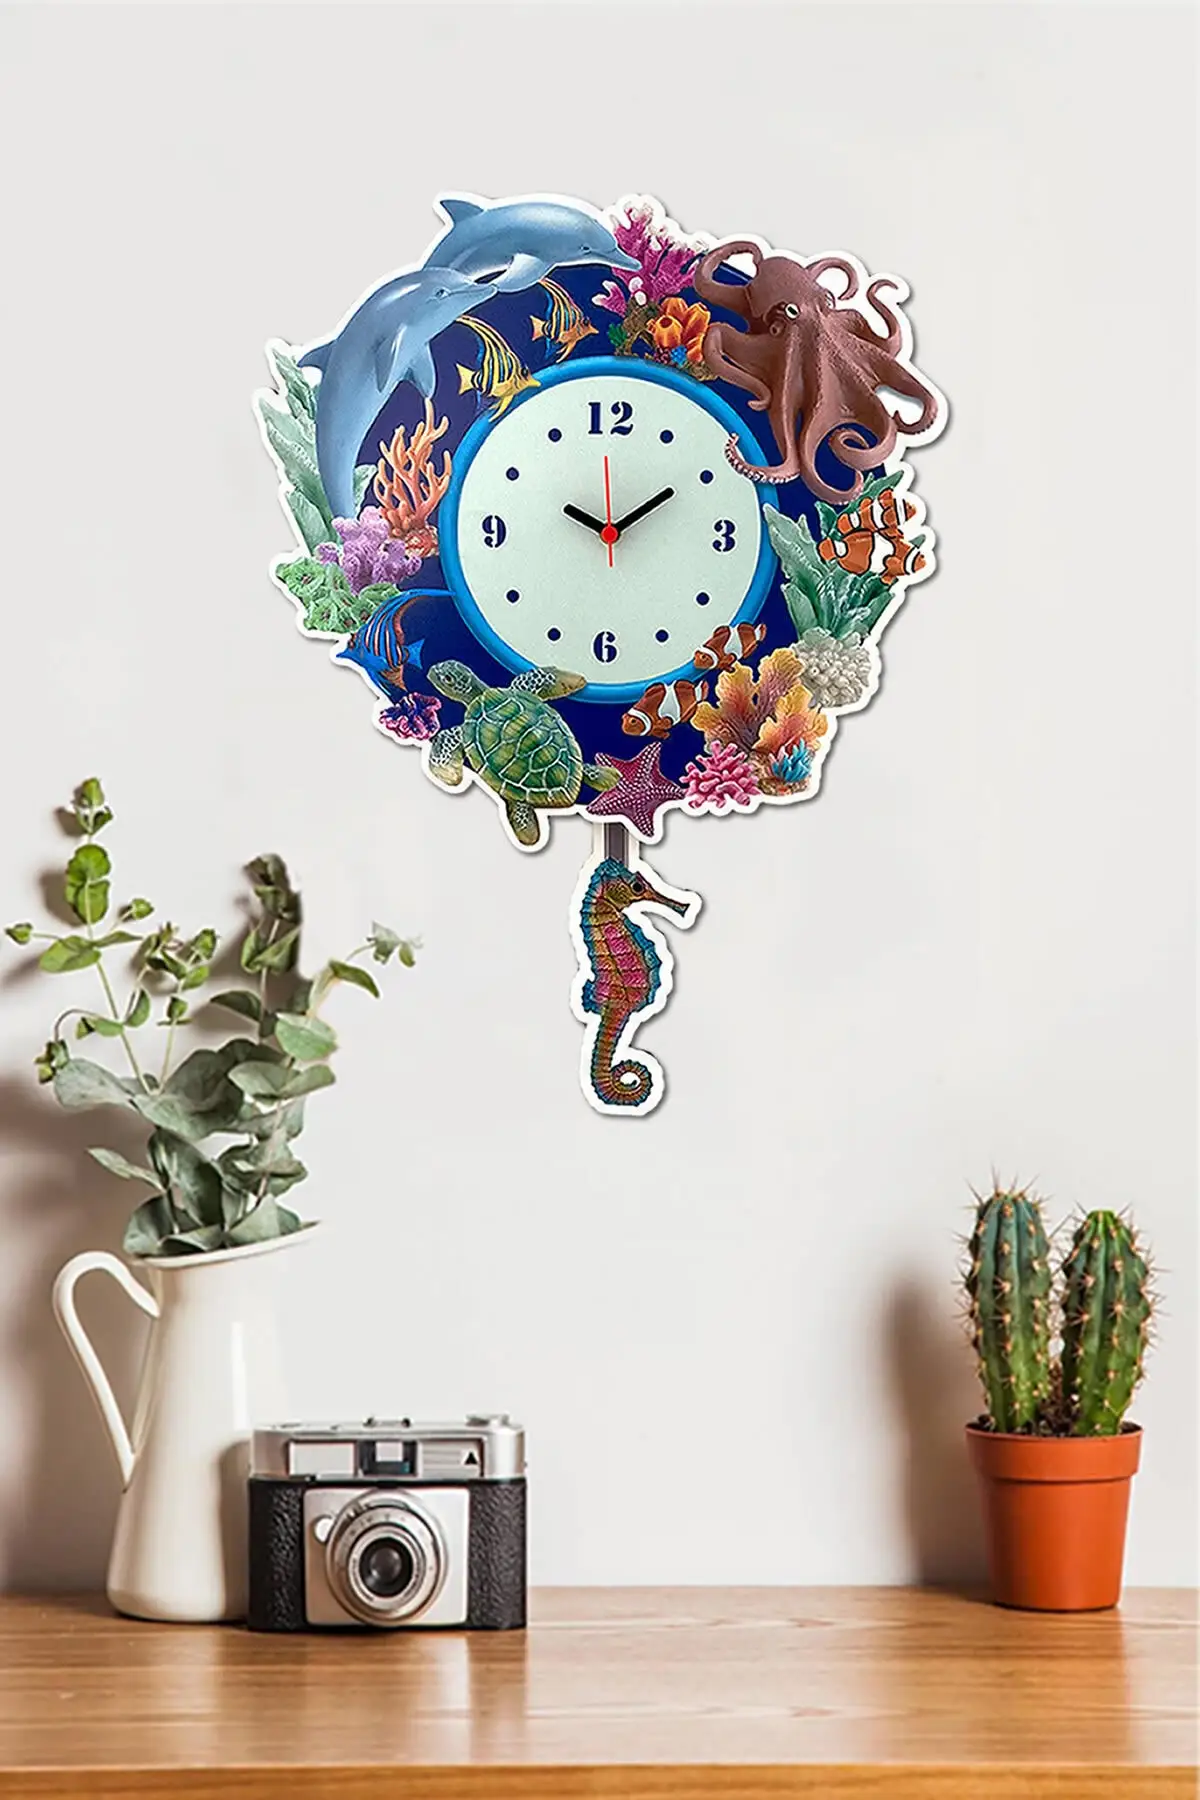 Ocean Theme Swinging Pendulum Wall Clock Home and Wall Decoration, Analog Wall Clok ,Giftable, Colorful Walls, Free Shipping